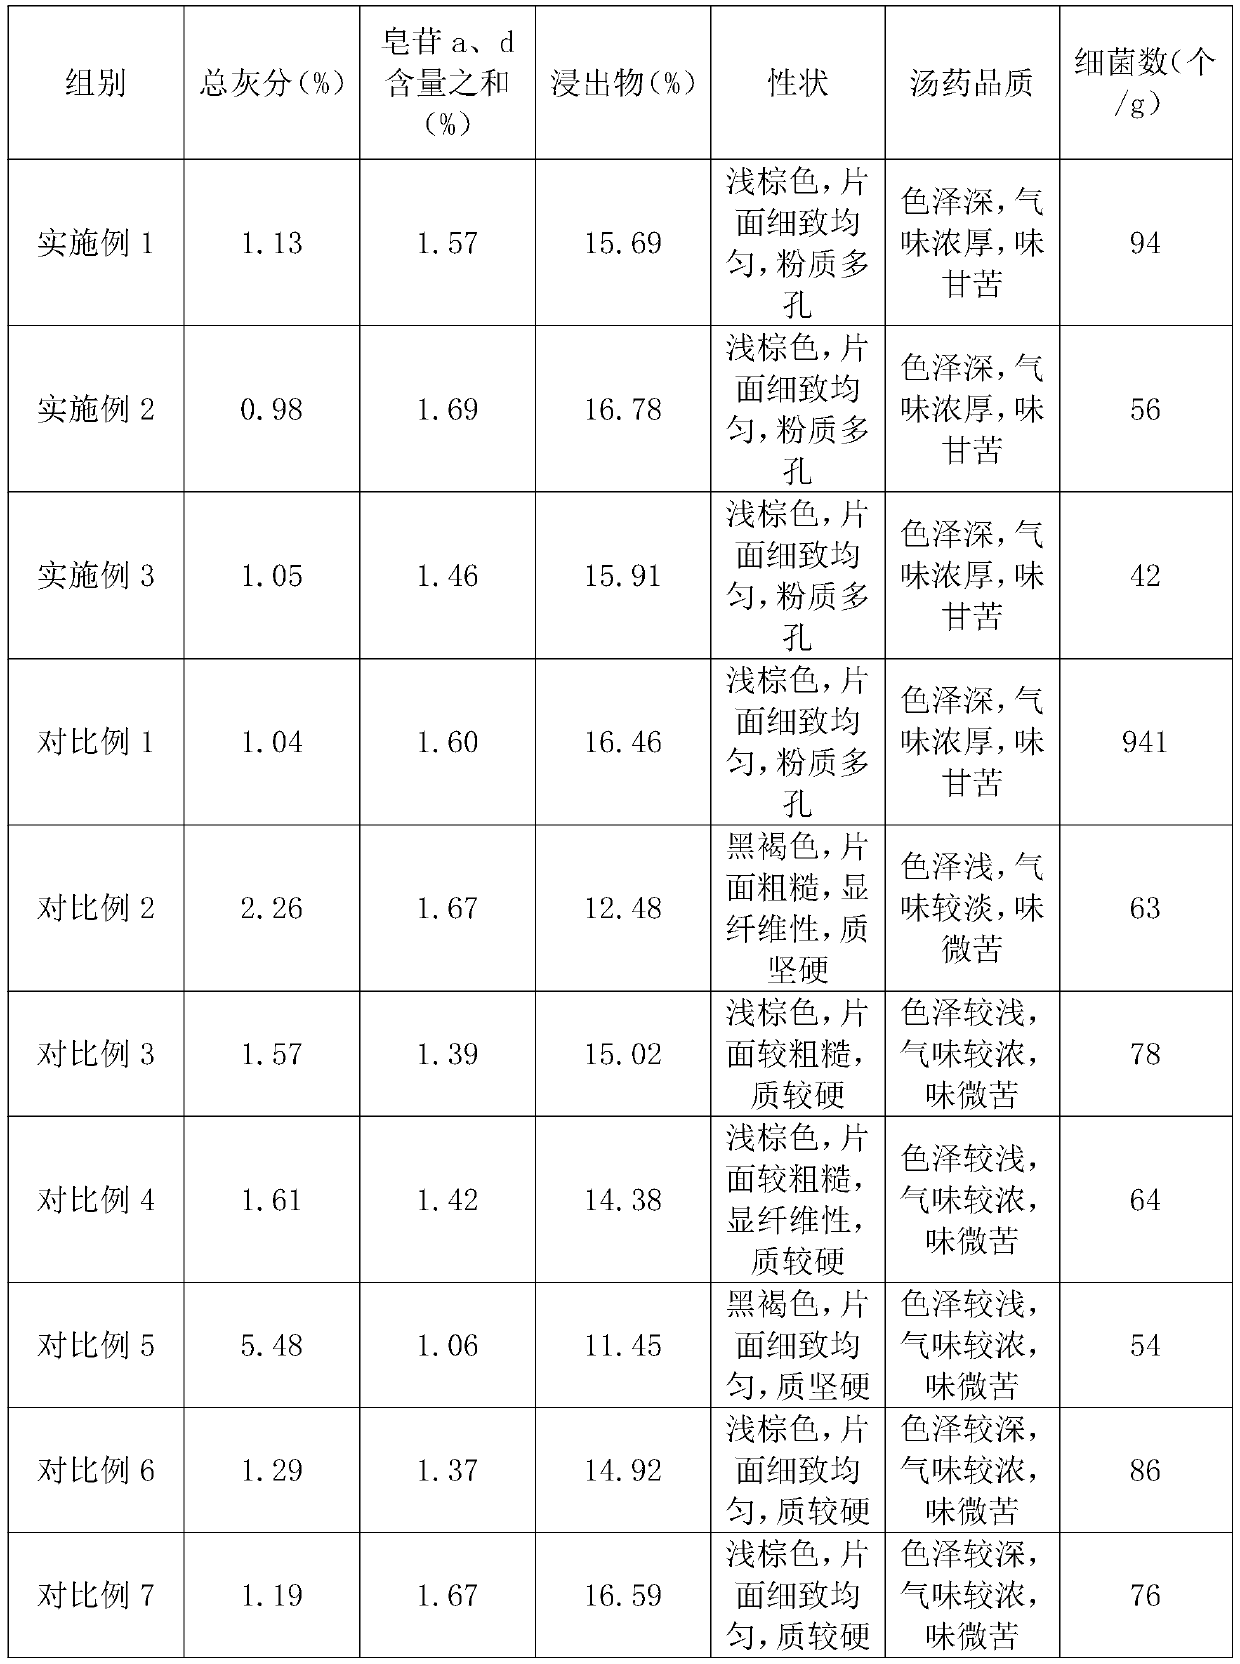 Chinese thorowax root screening and processing method